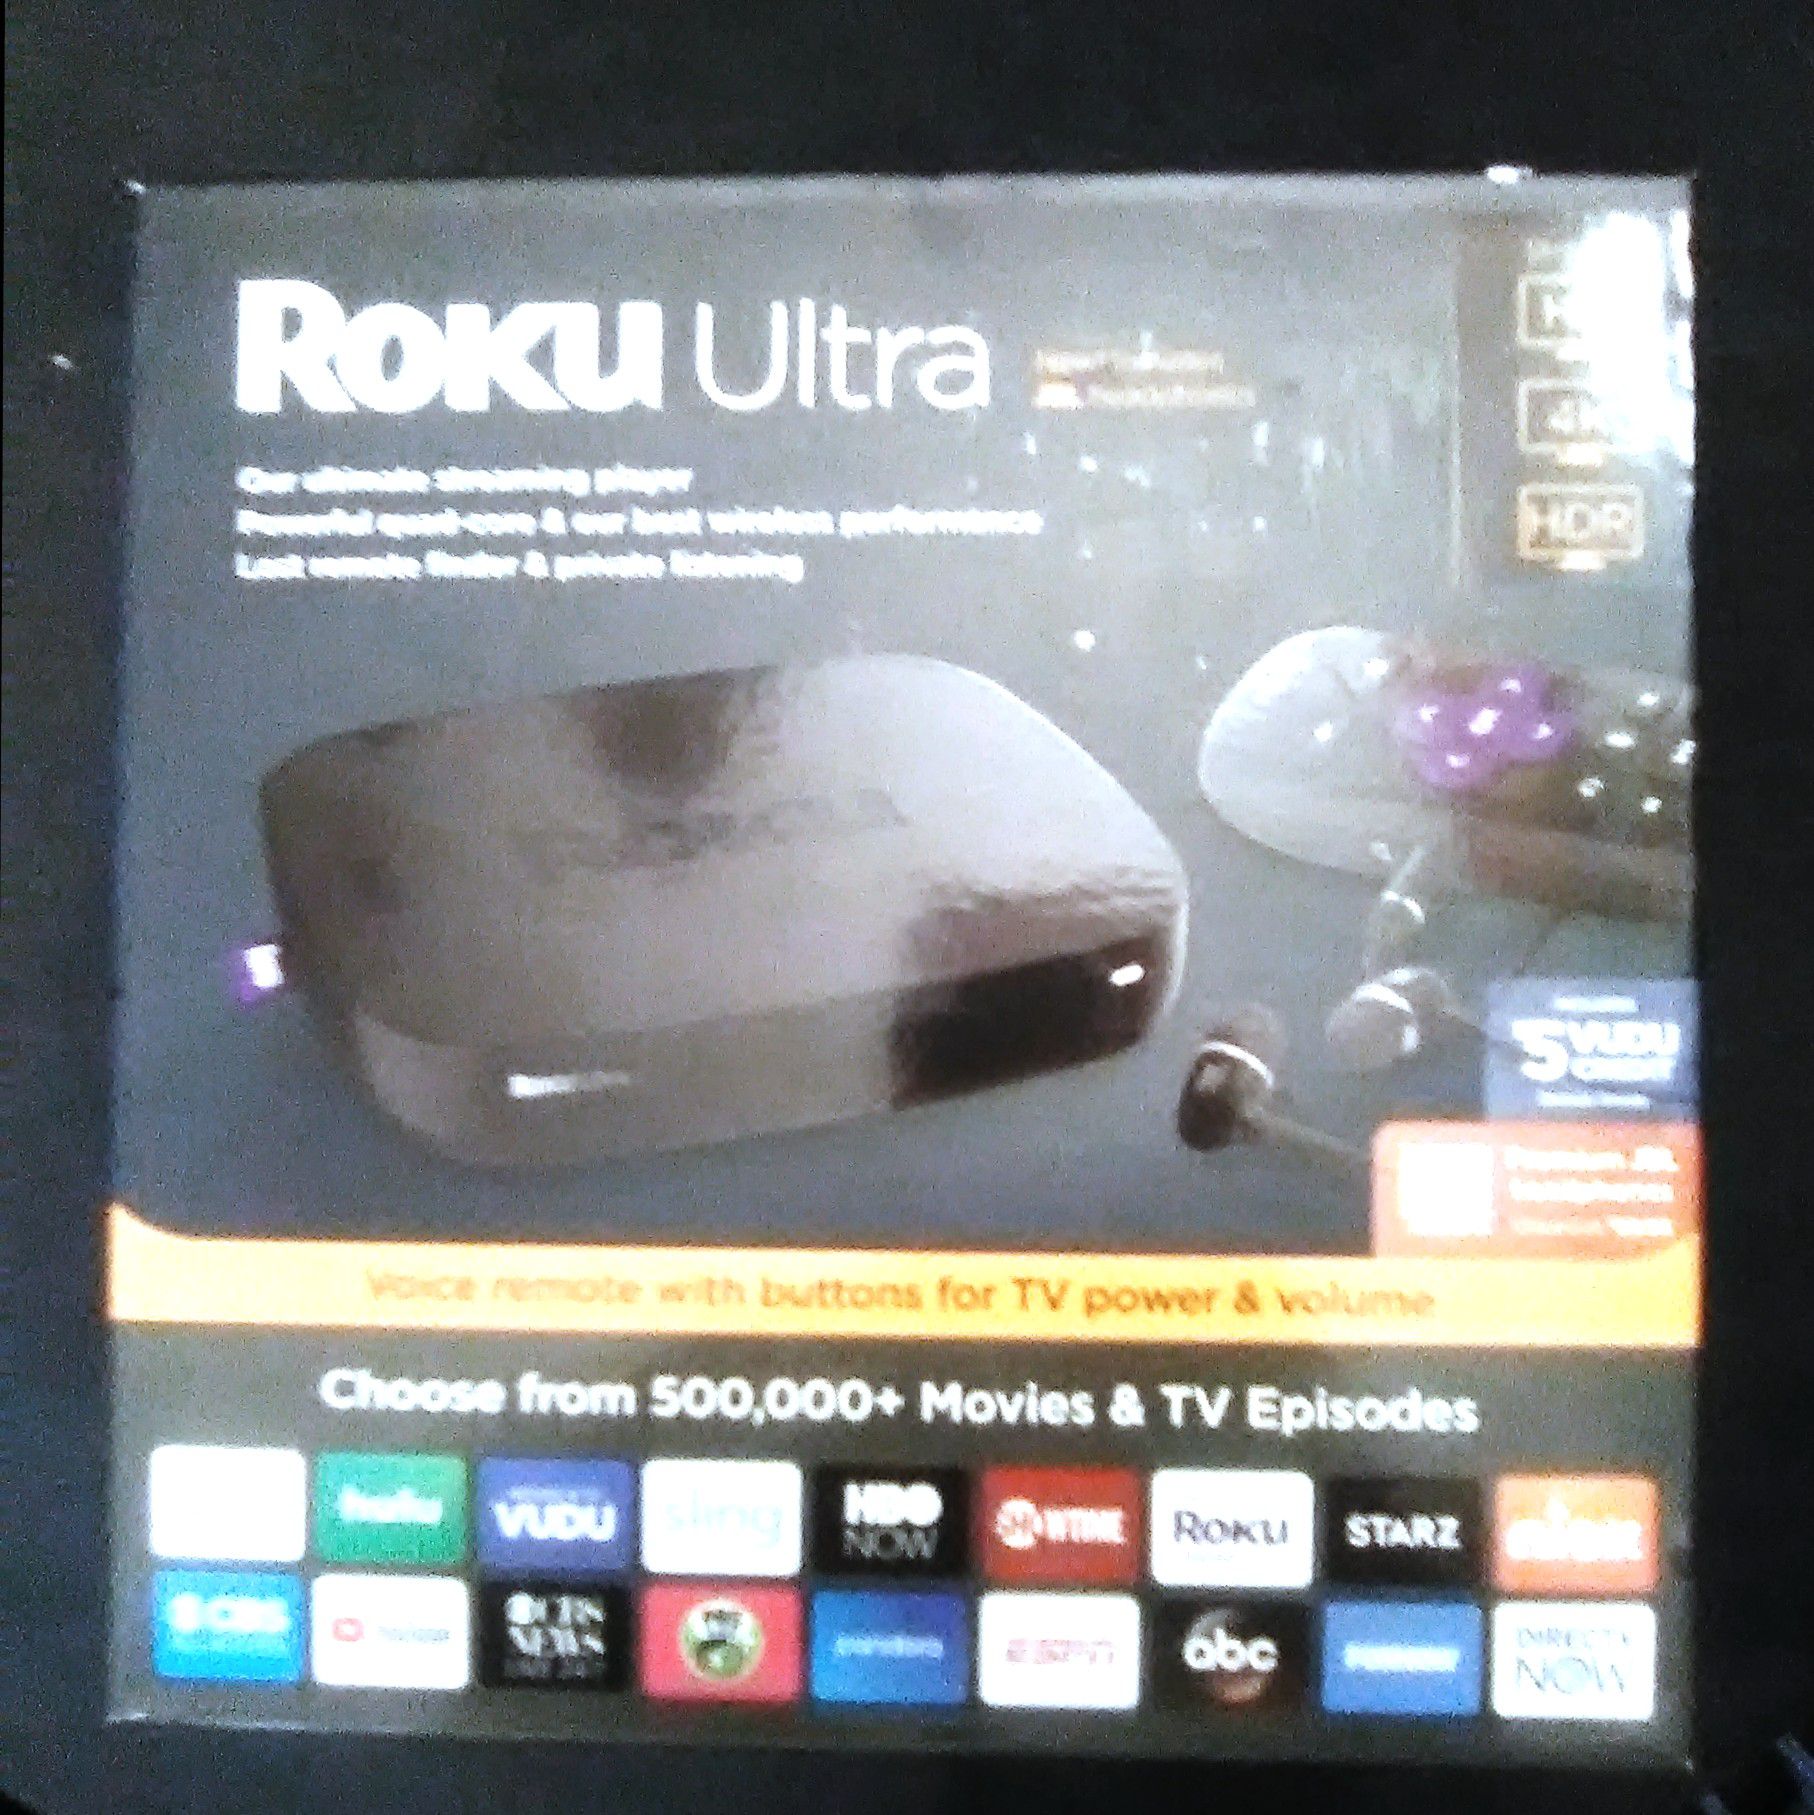 Brand new, unopened ROKU Ultra